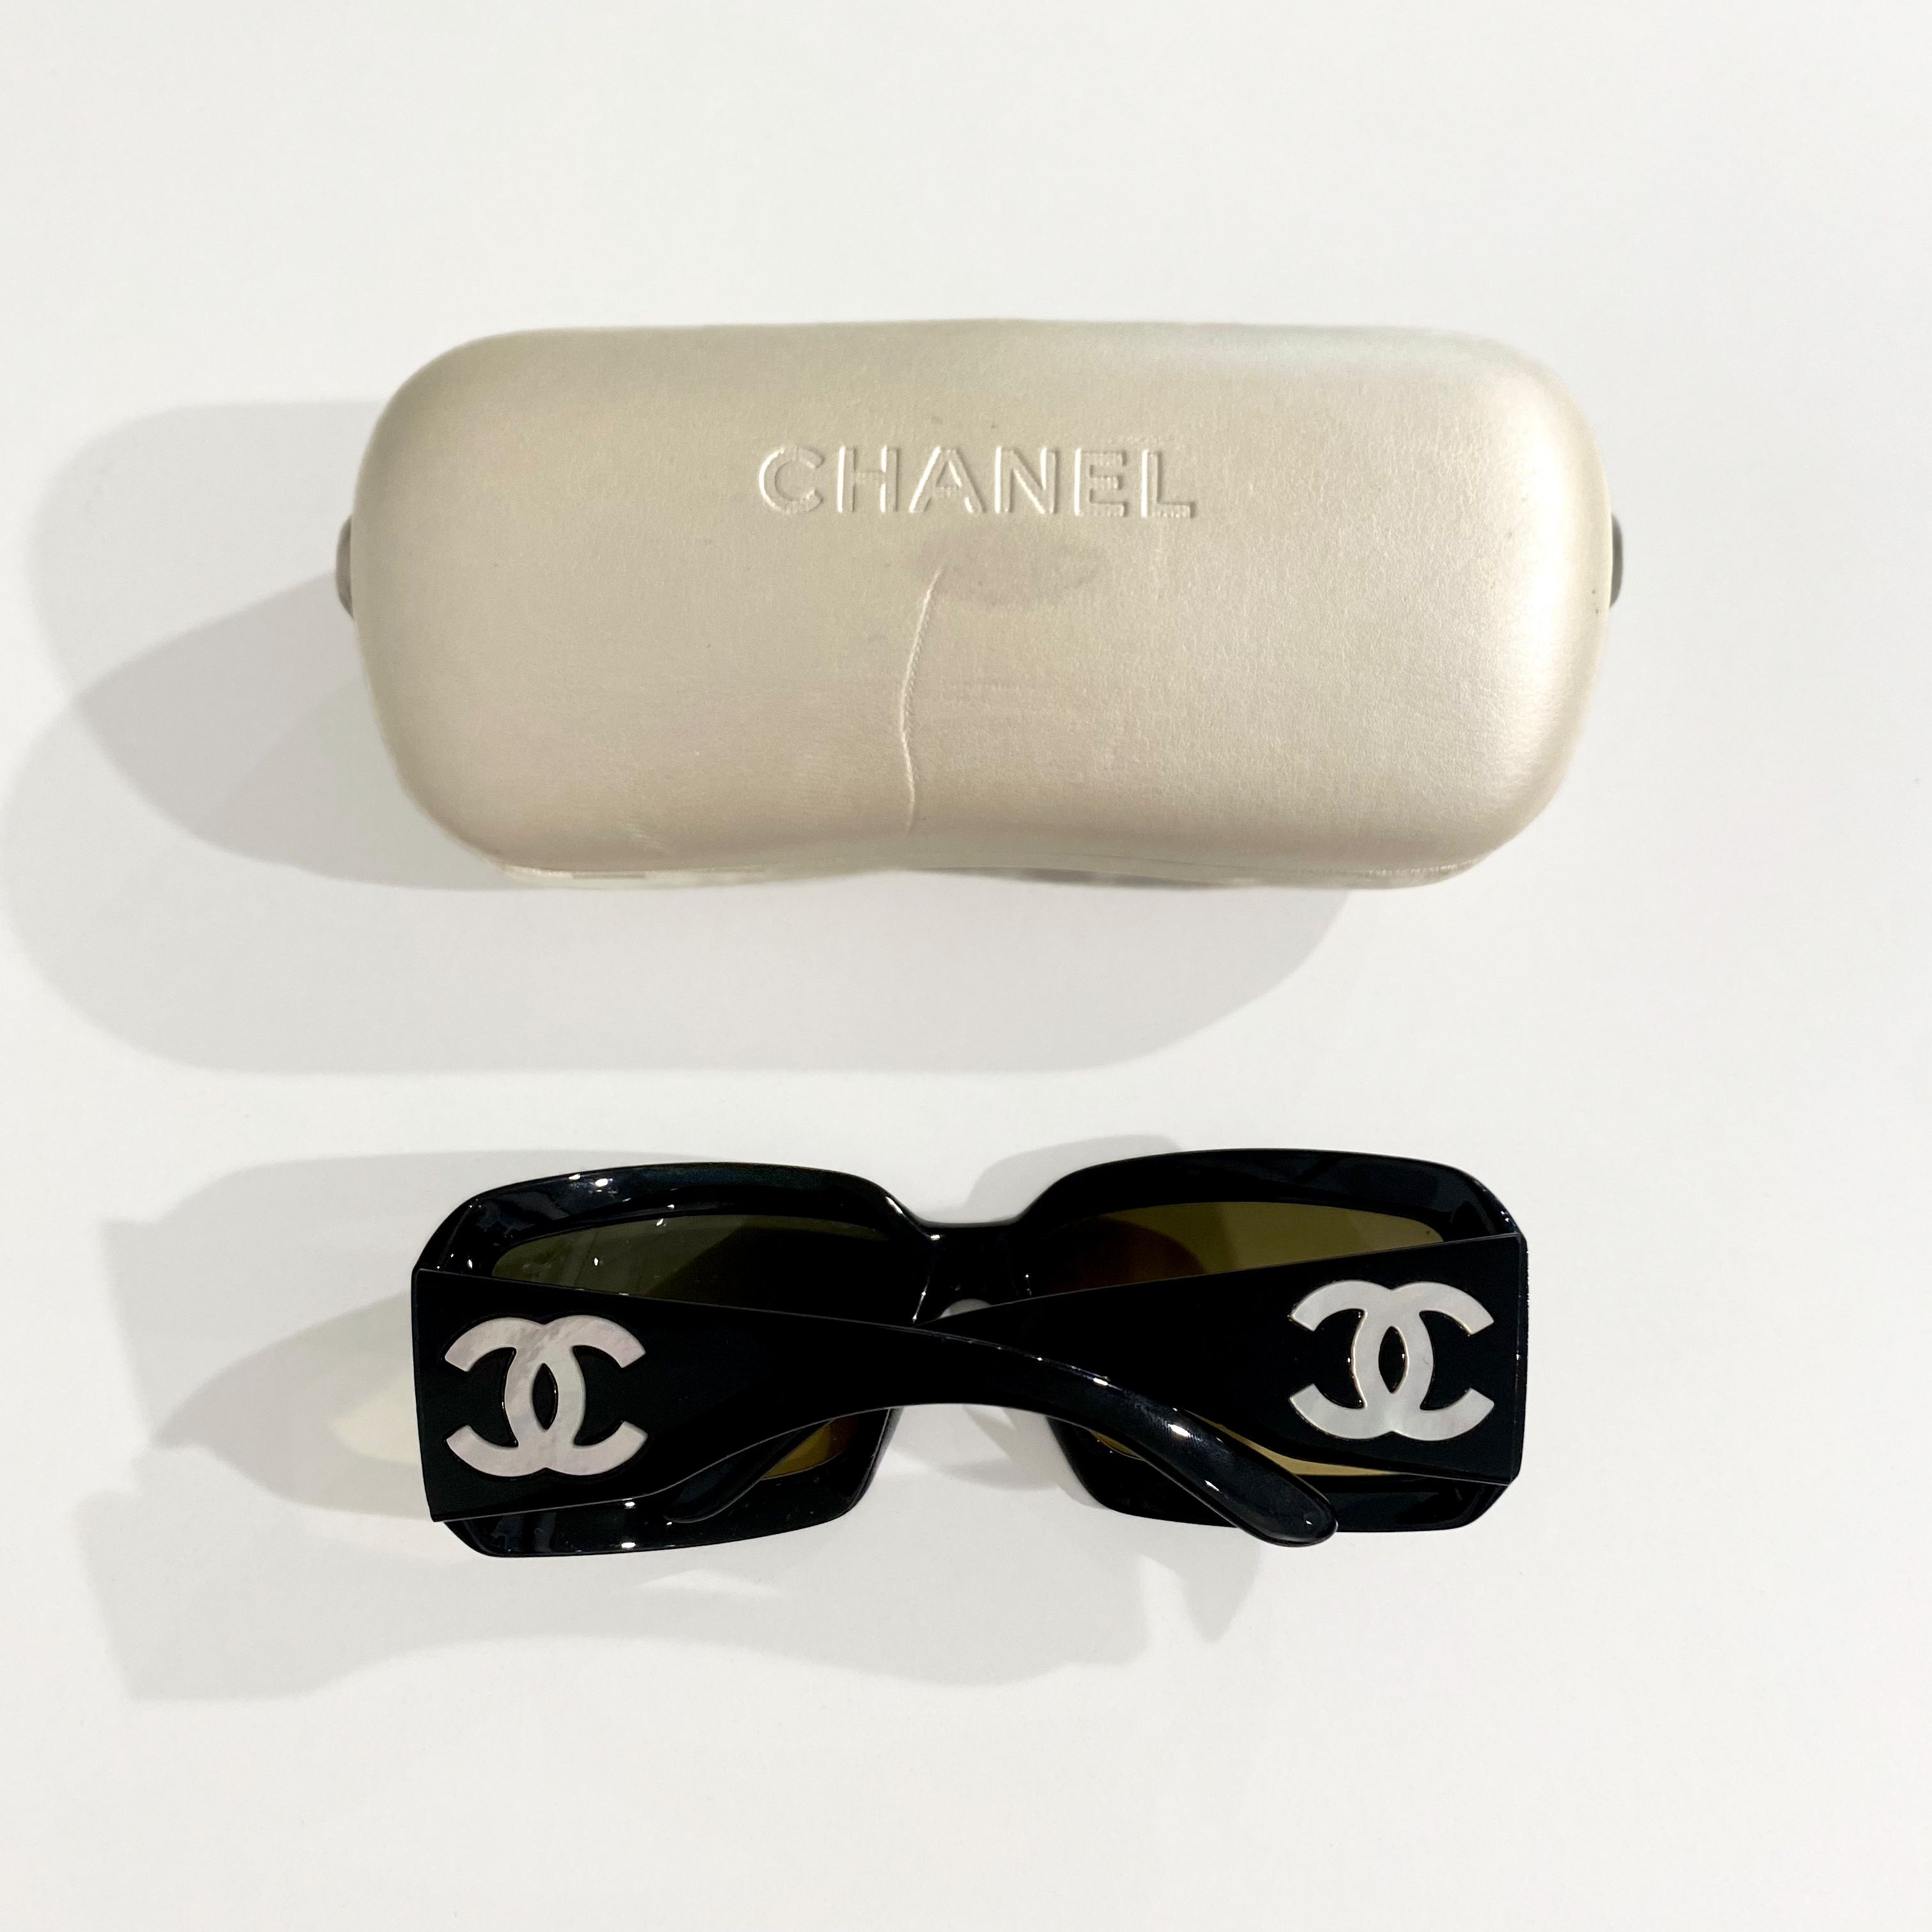 chanel glasses rx frames